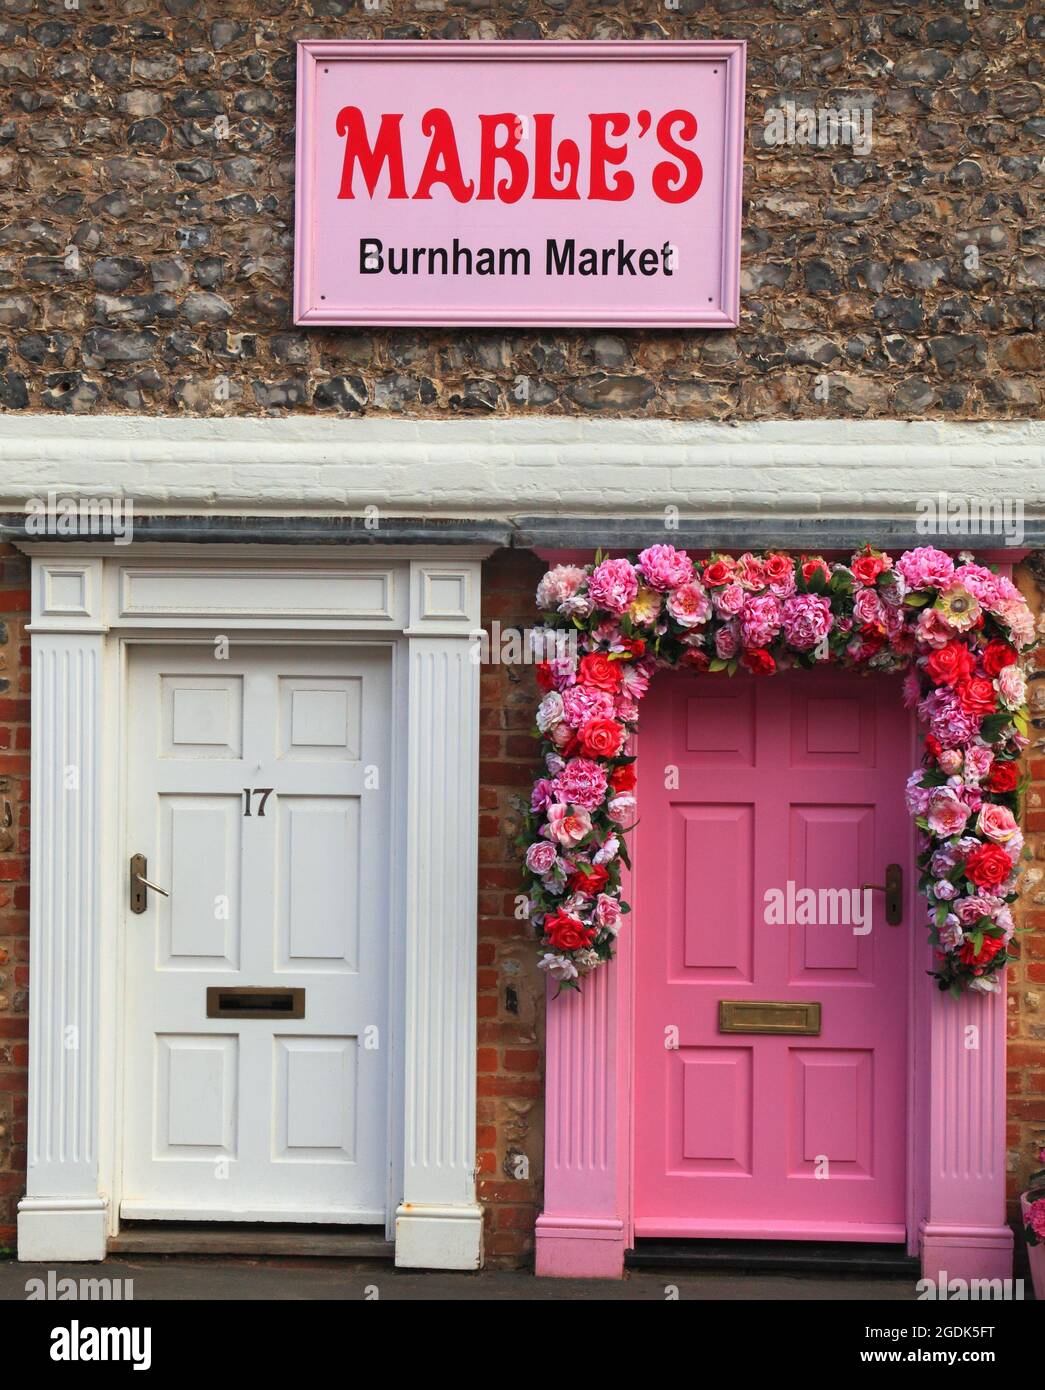 Mable's Shop, entrada, puerta florida, flores, decoración floral, Burnham Market, Norfolk Foto de stock